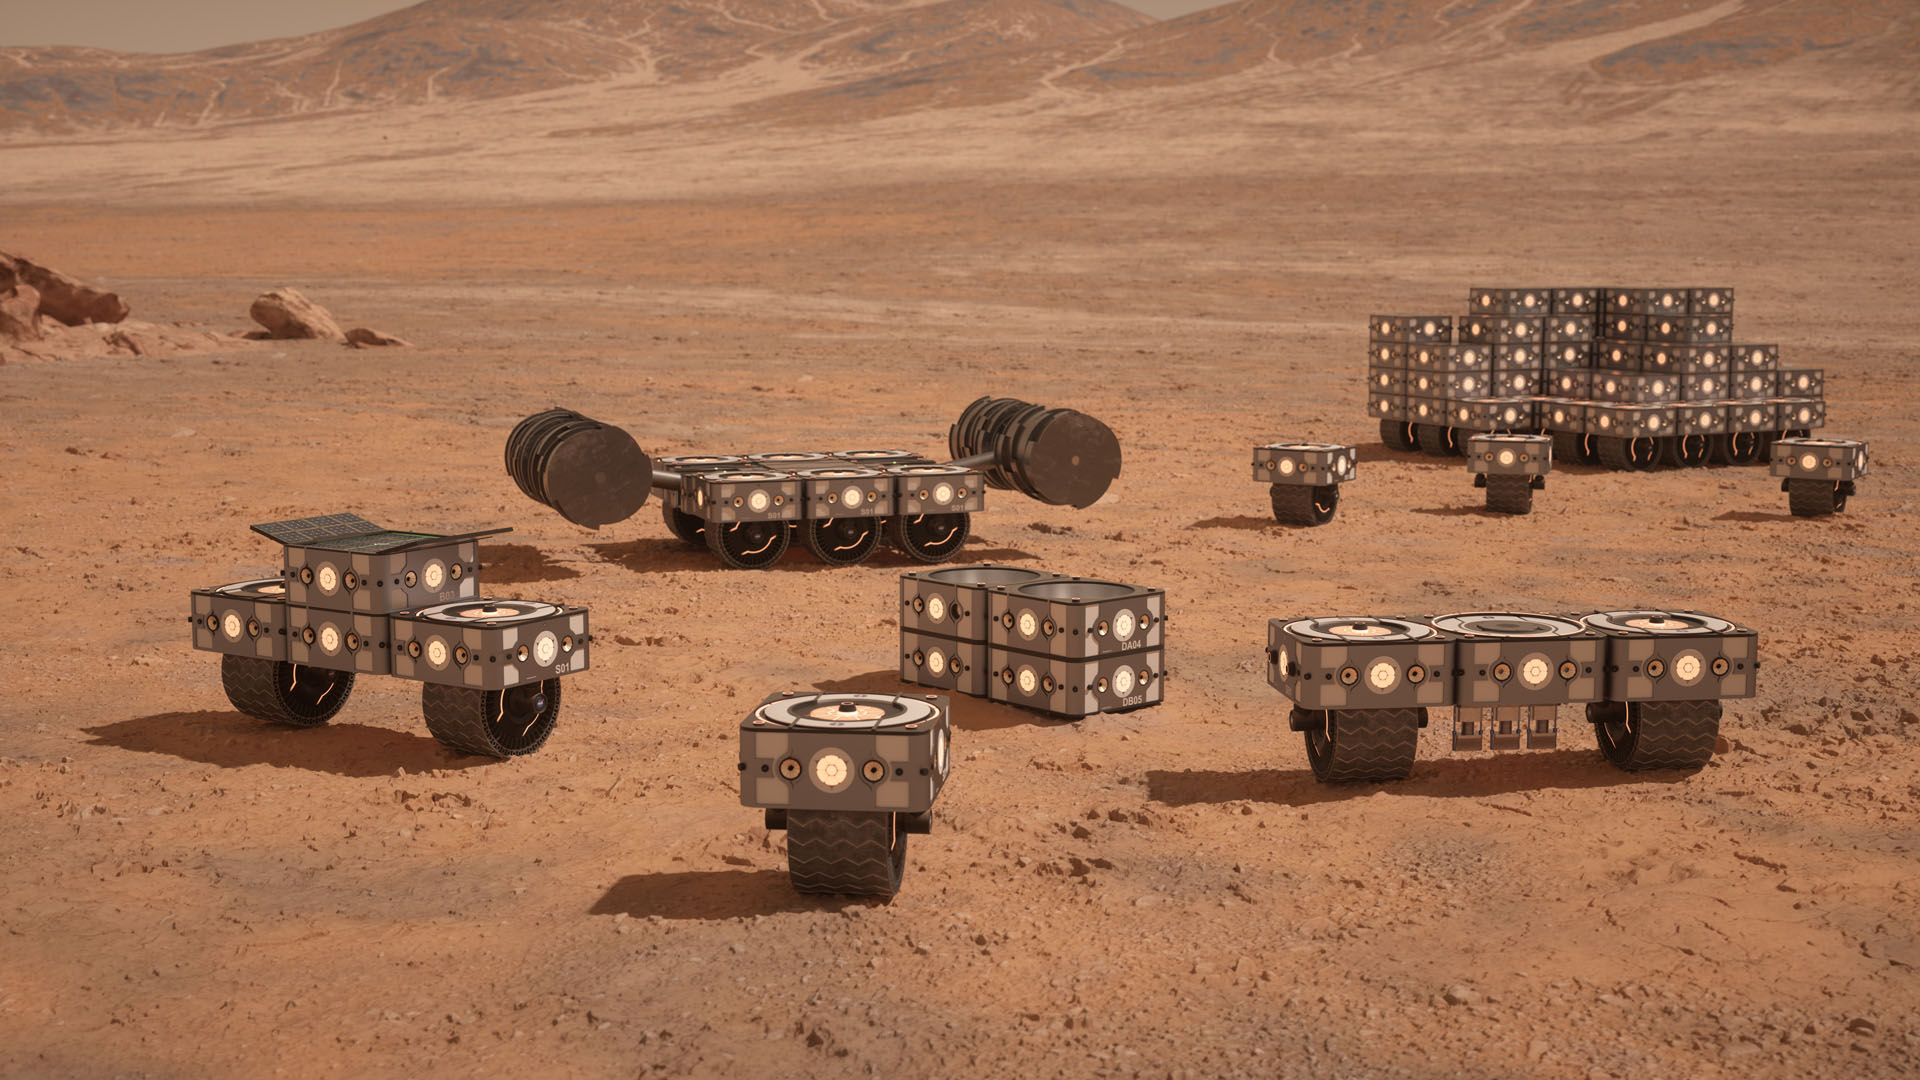 3D printed Mars Habitat phase of NASA's Centennial Challenge)